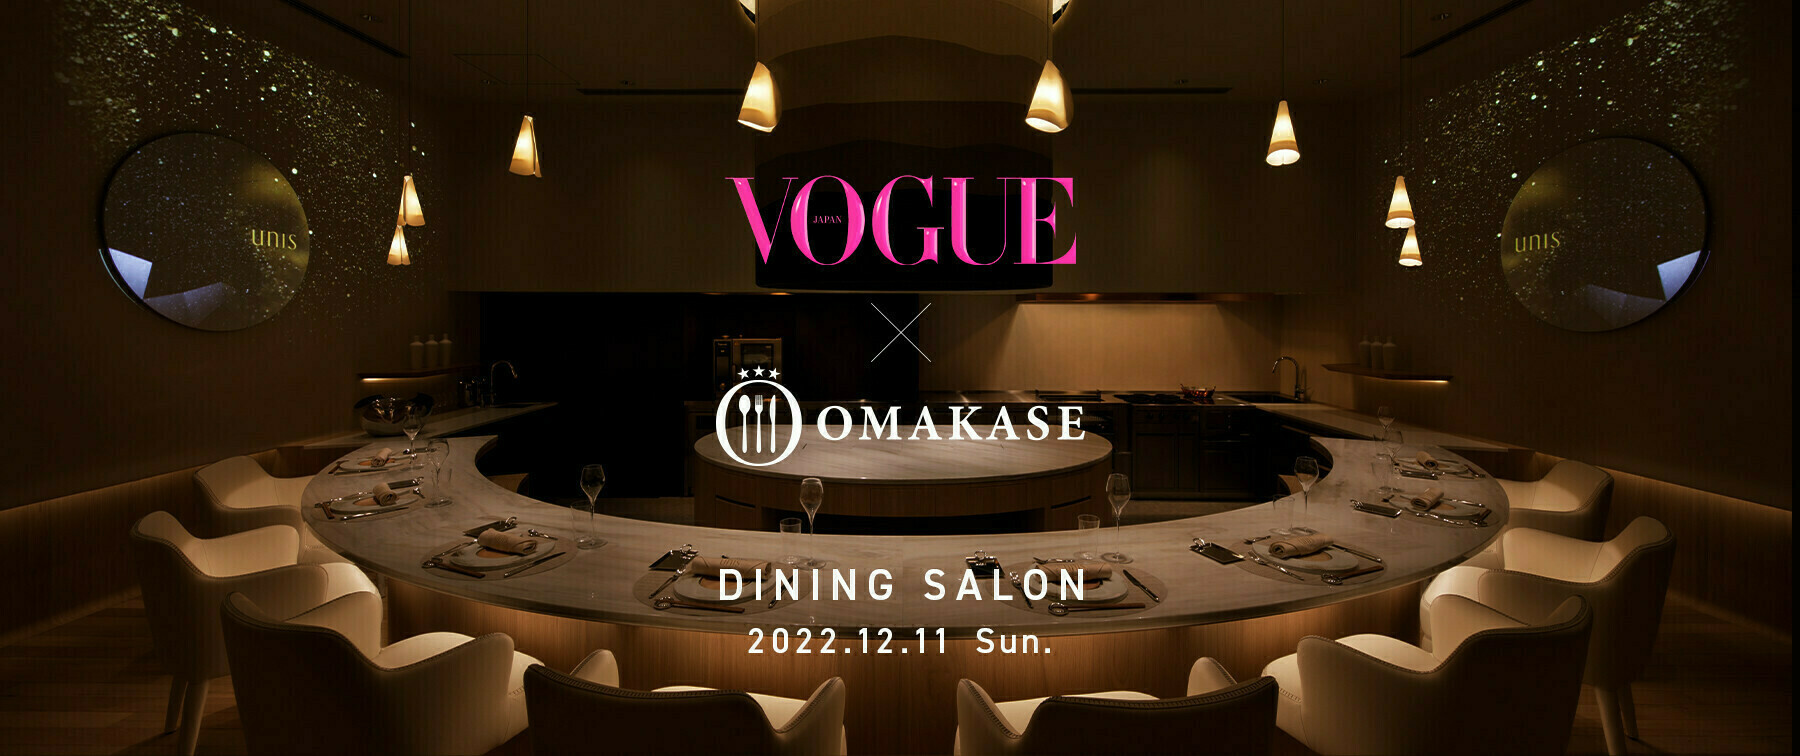 [Finished]『VOGUE JAPAN』 x OMAKASE DINING SALON at unis's image